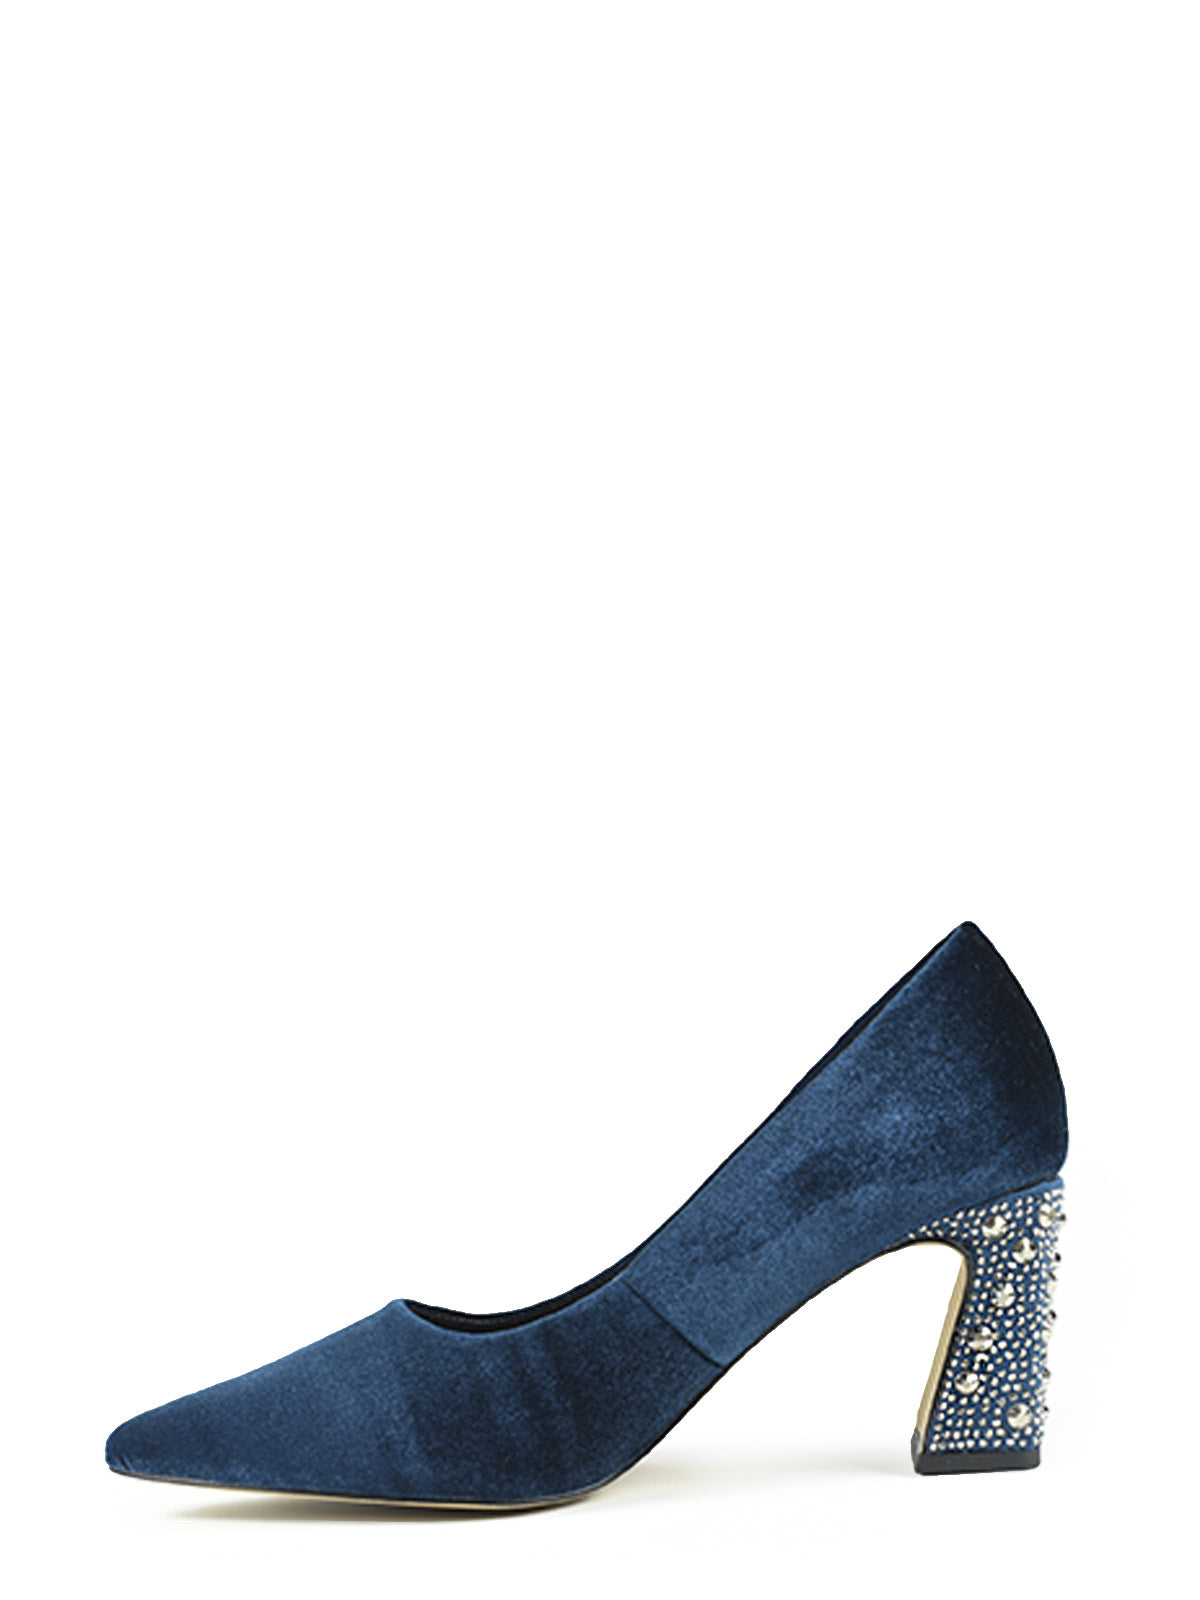 Zapato de salón azul terciopelo y tacón de pedredría